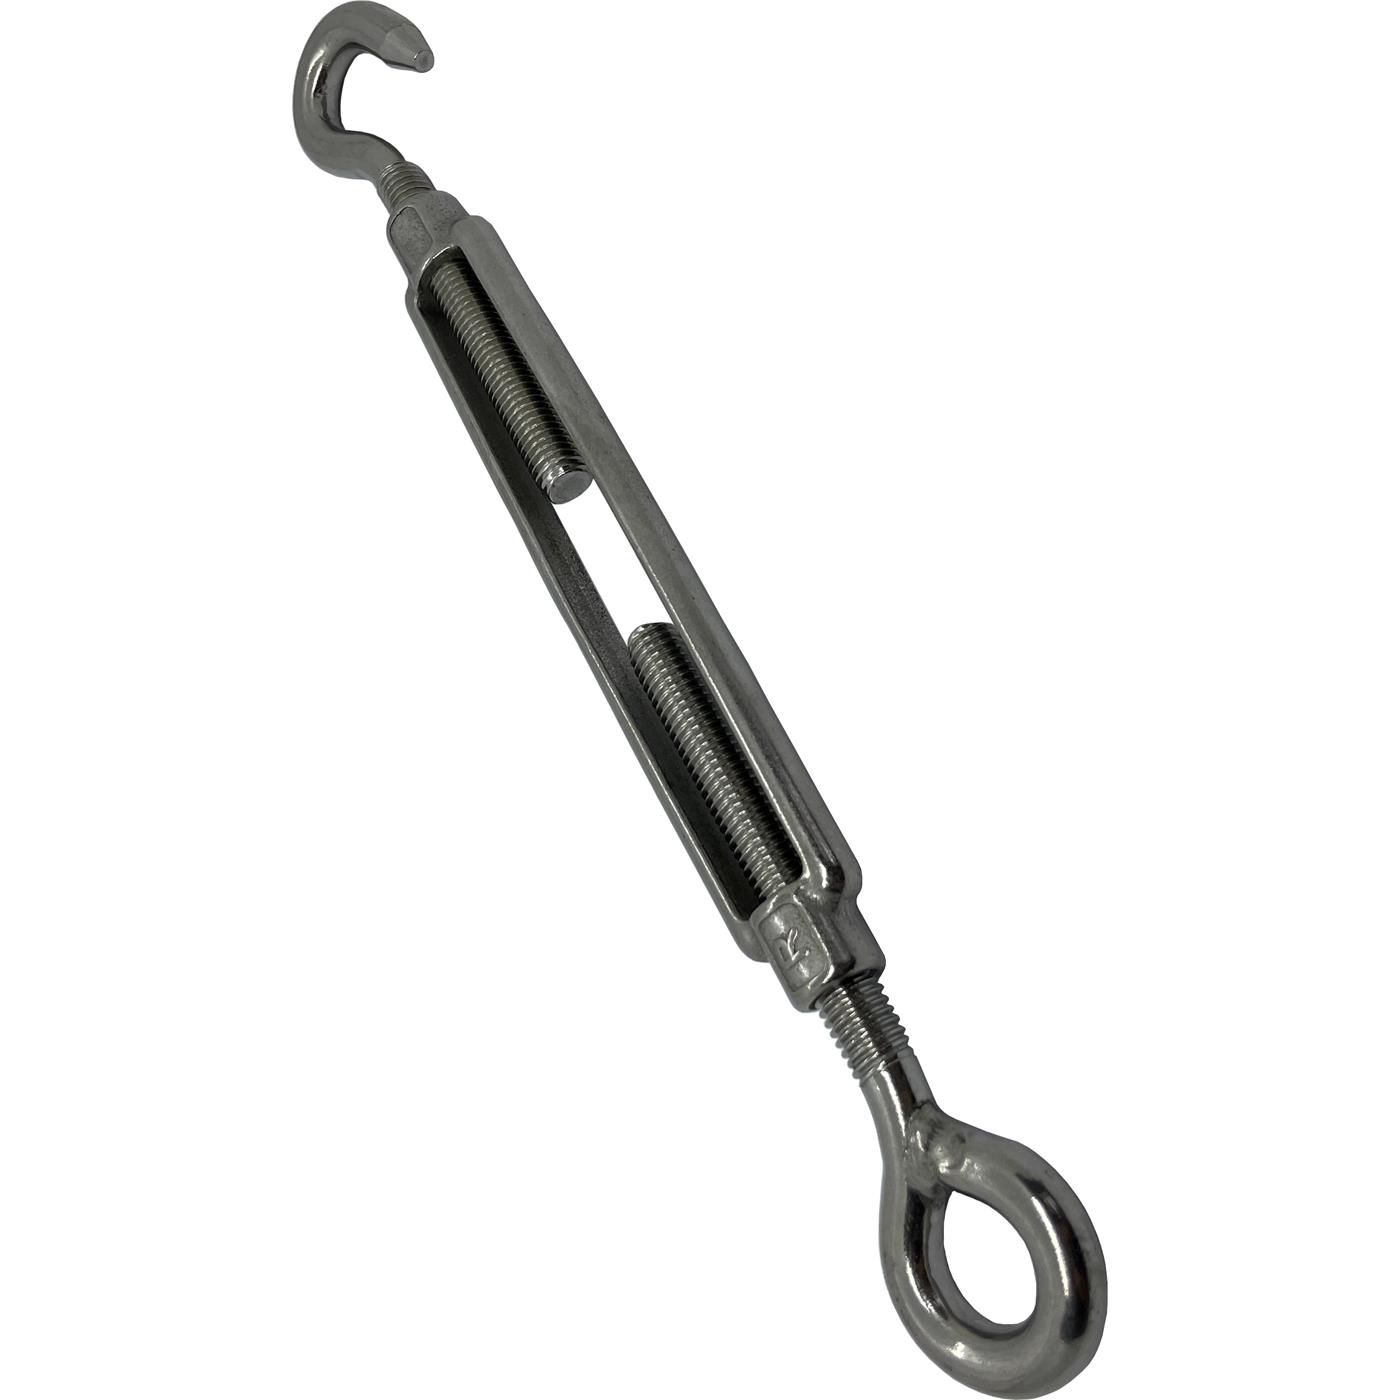 Rope tensioner Eyelet-Hook Stainless steel V4A 316 M10 Turnbuckle Shroud clamp